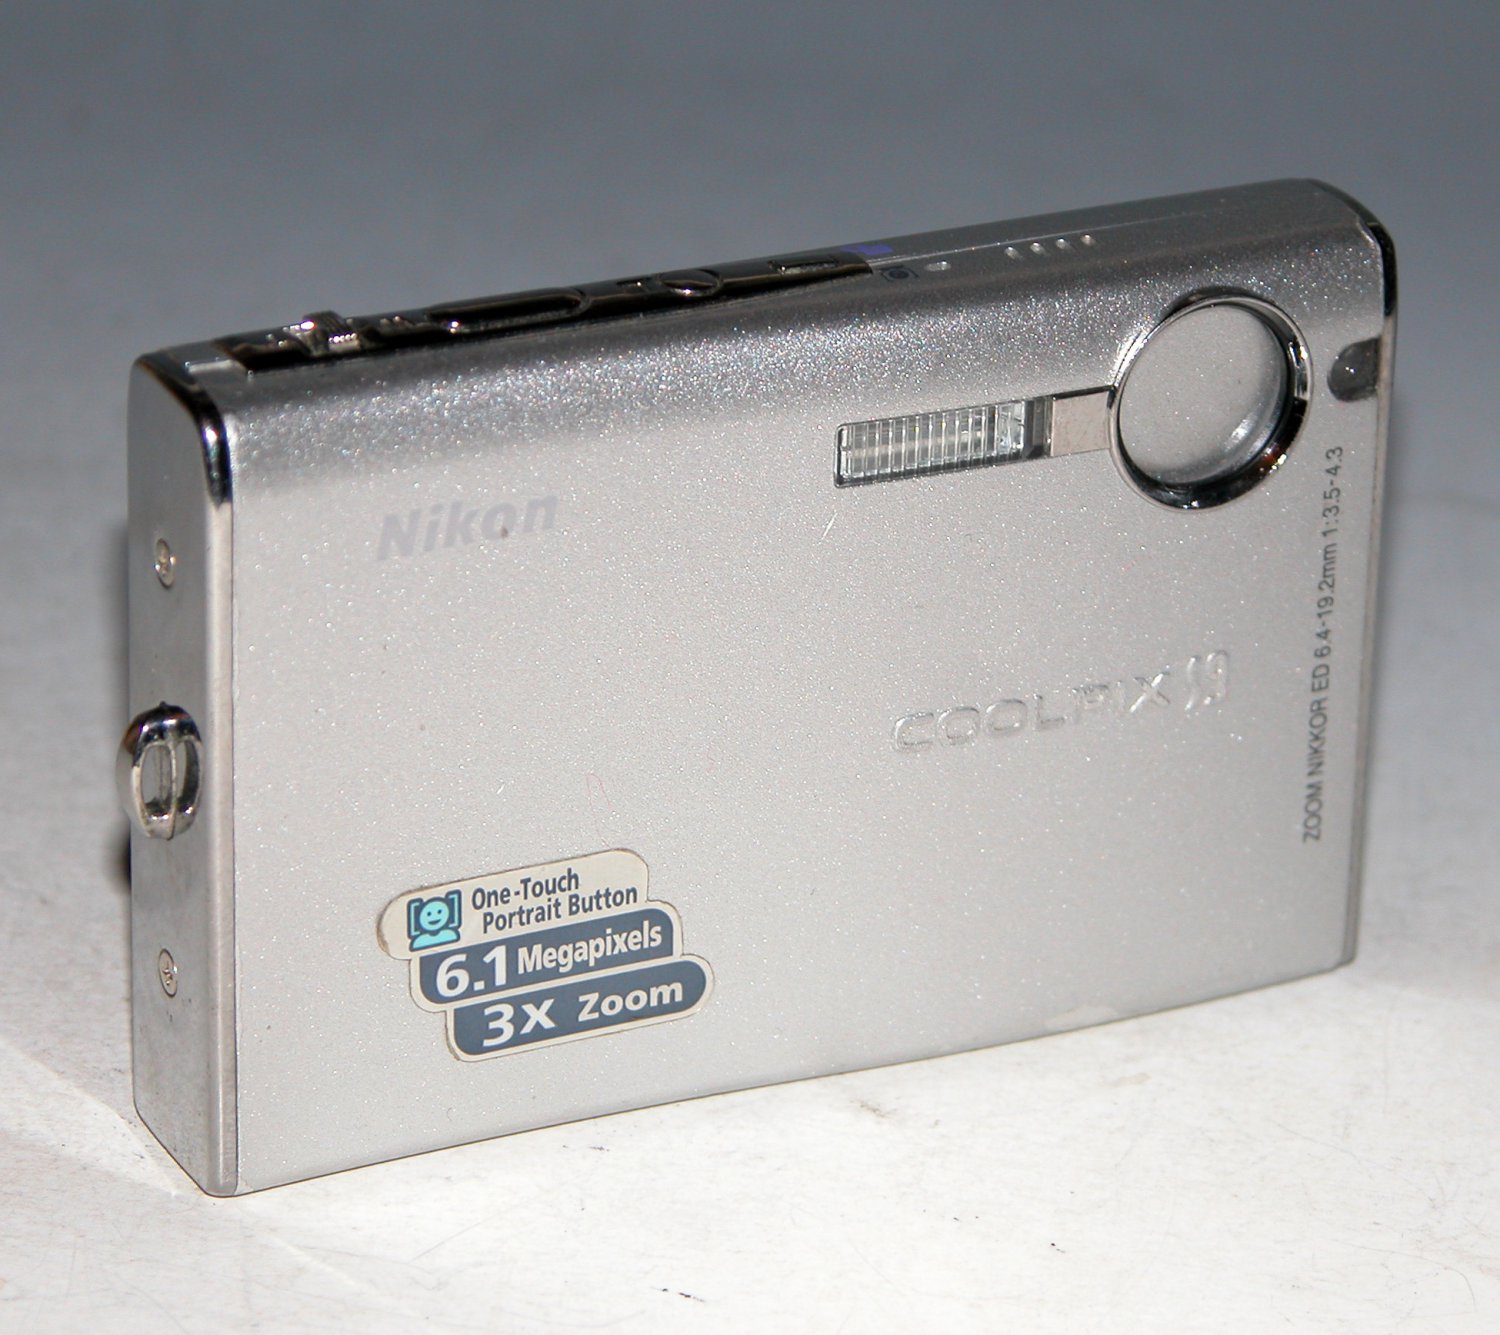 Nikon Coolpix S9 6.1MP Digital Camera - Silver #6810